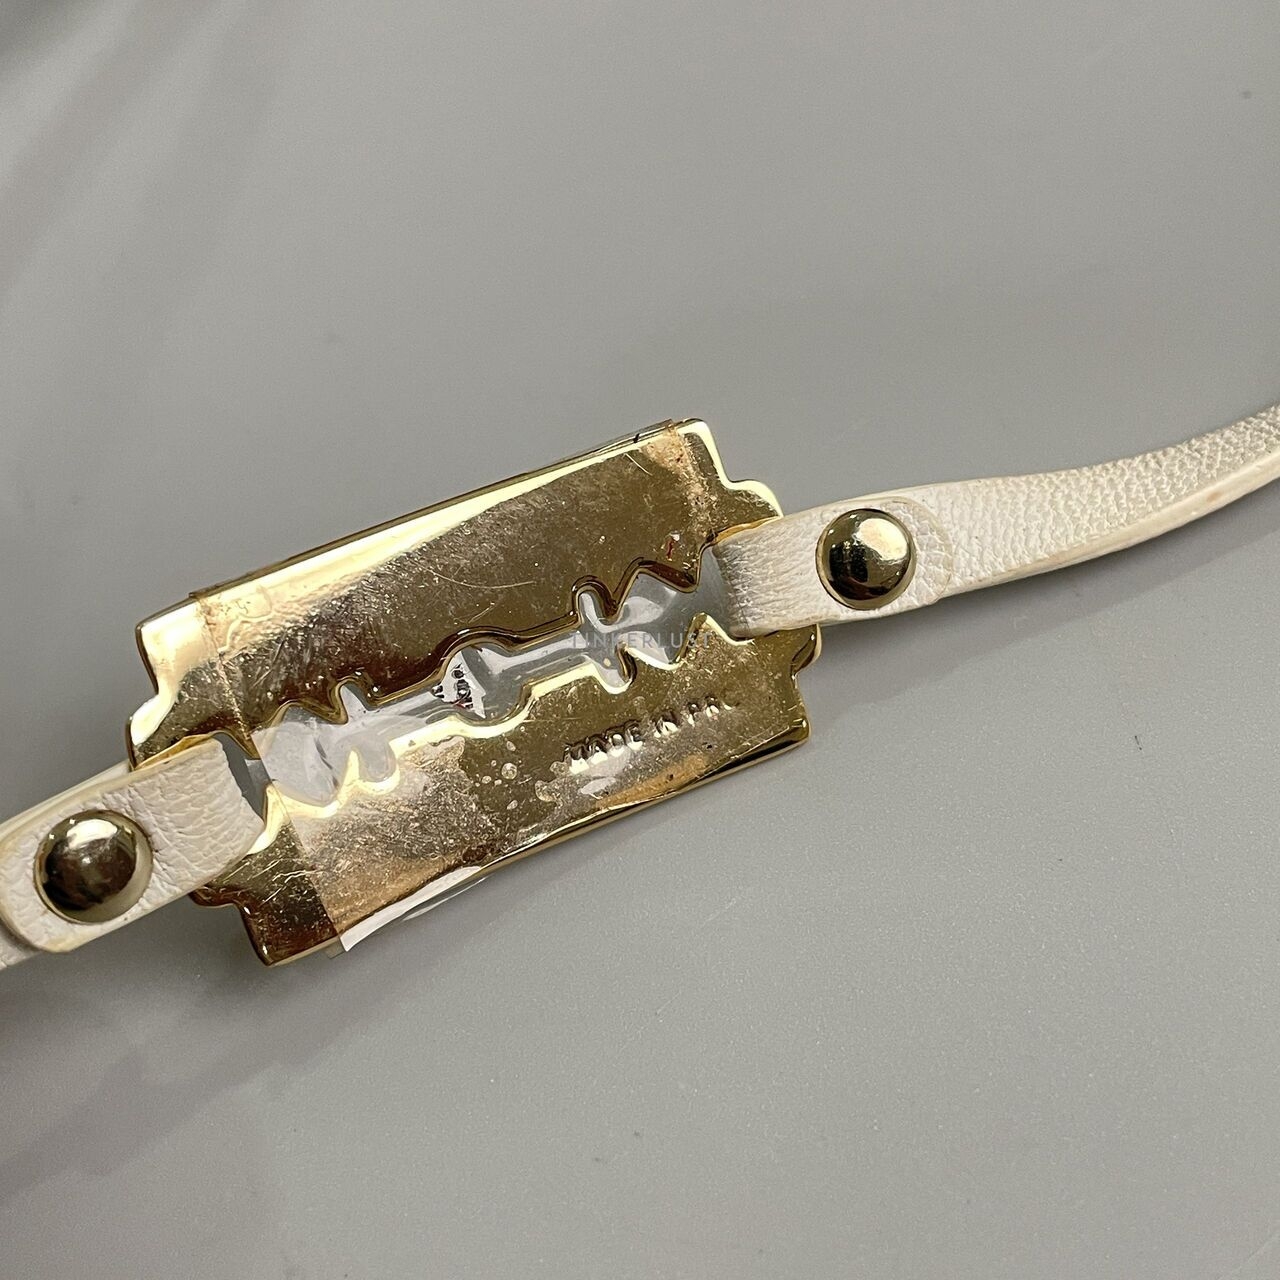 Mcq Alexander Mcqueen Leather Razor Blade Wrap Bracelet 